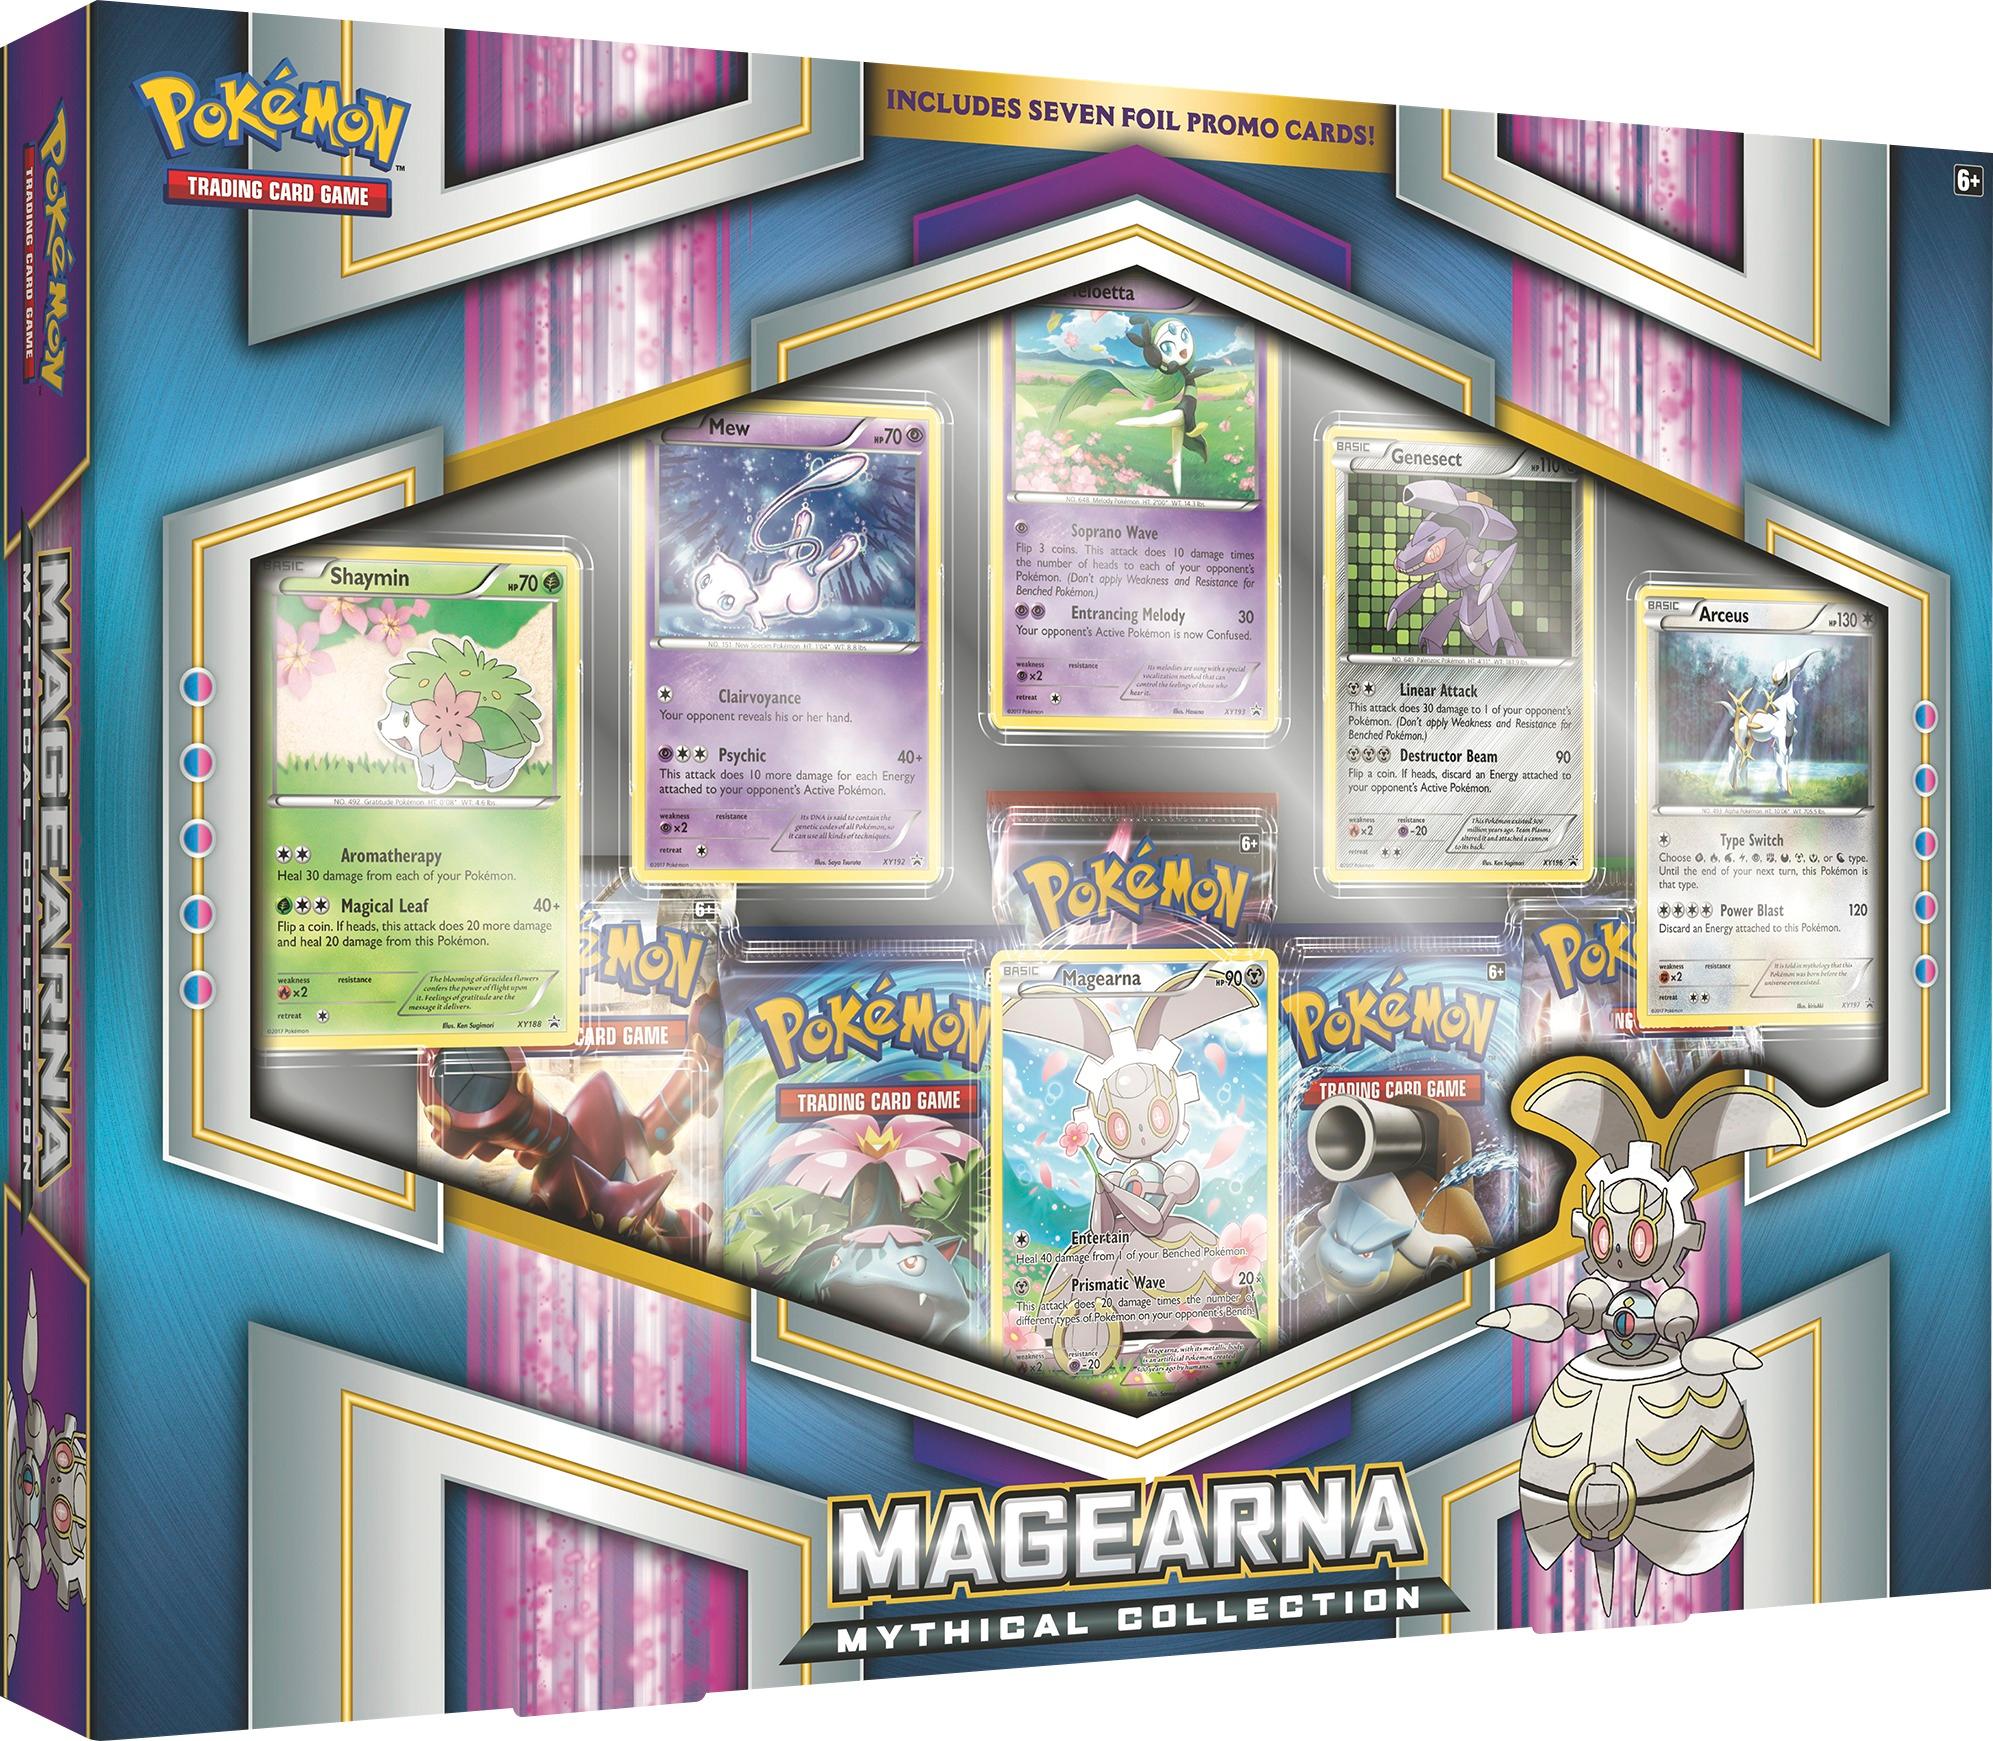 Pokémon TCG: Mythical Pokémon Collection–Meloetta